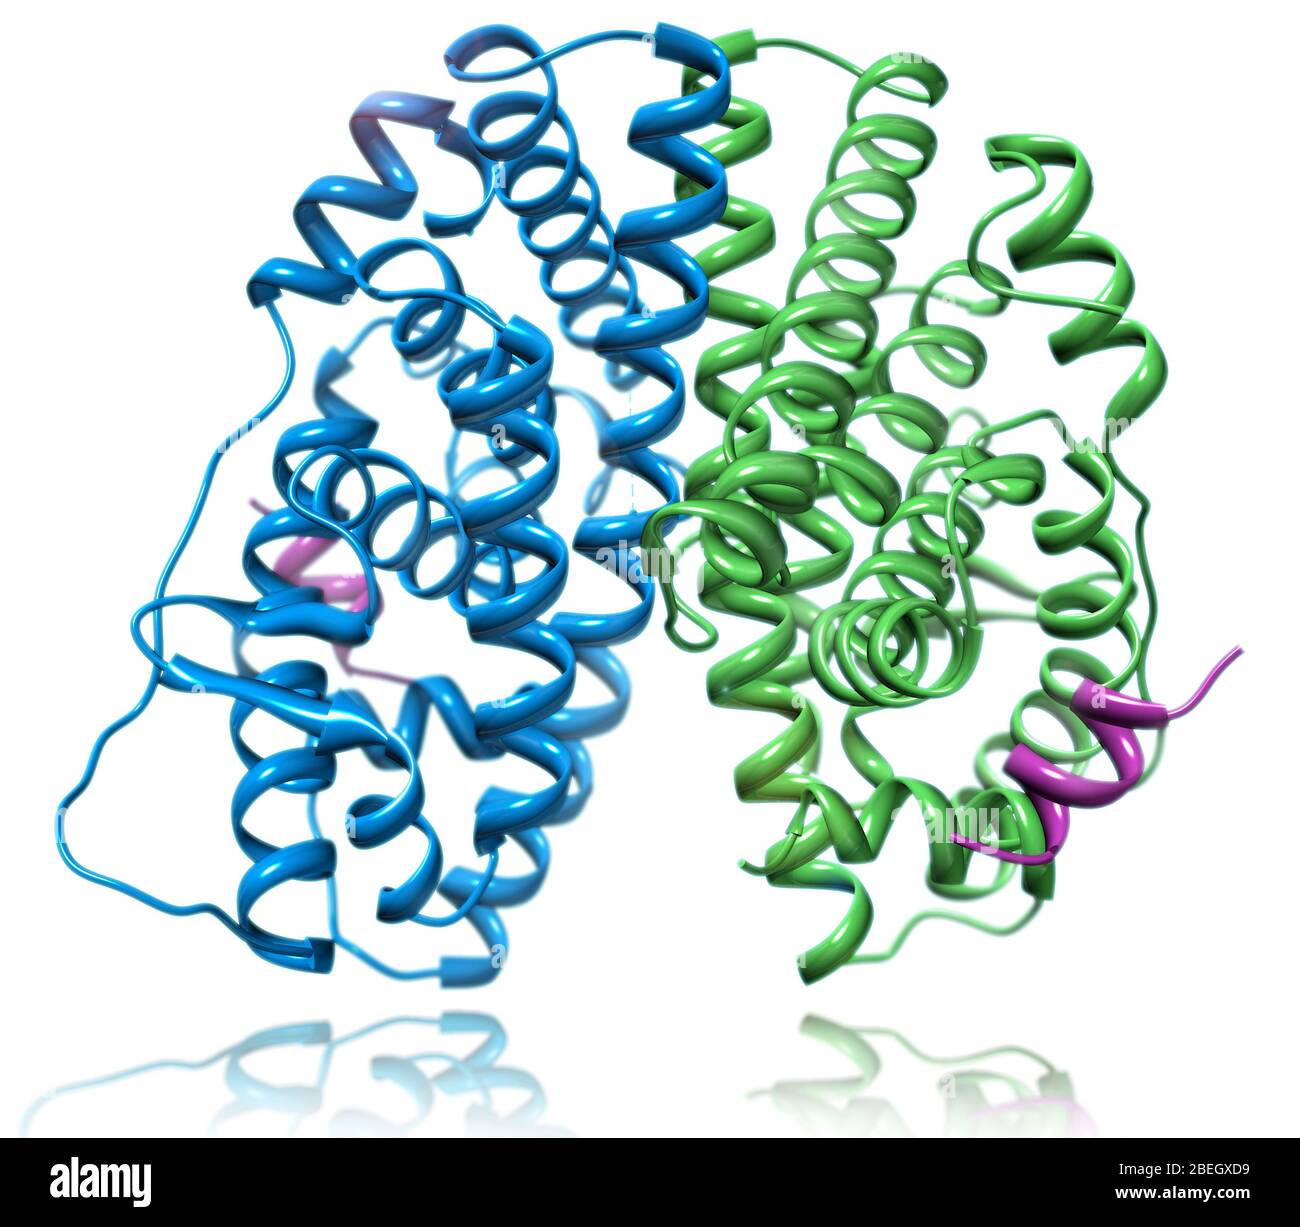 Estrogren Receptor Alpha Molecular Model Stock Photo